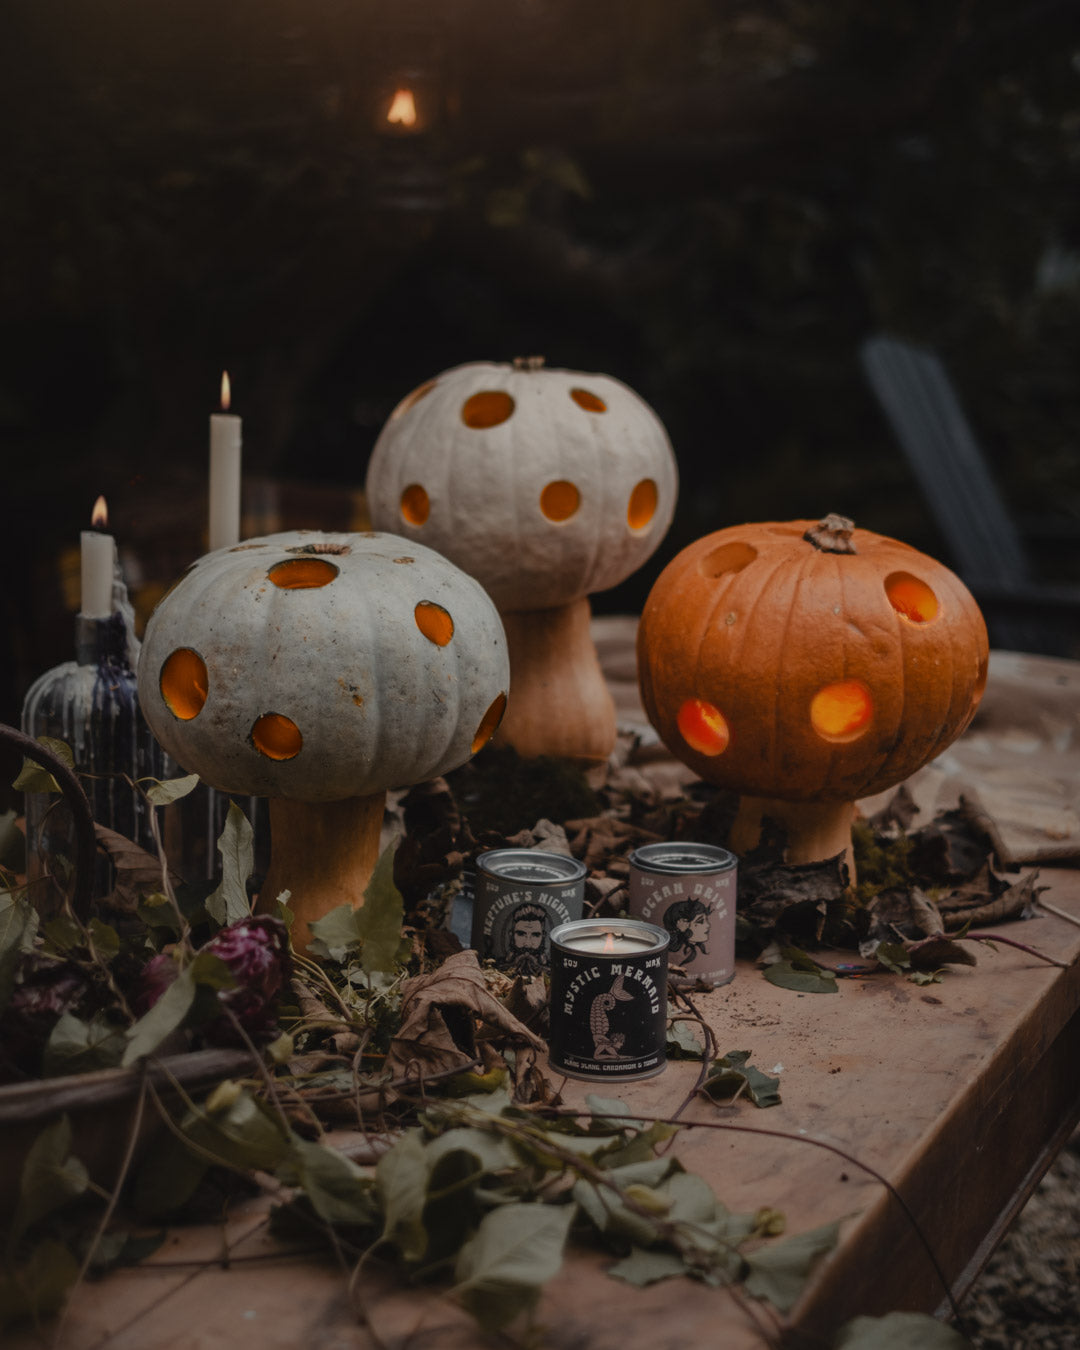 Toadstool & mushroom pumpkins for Halloween